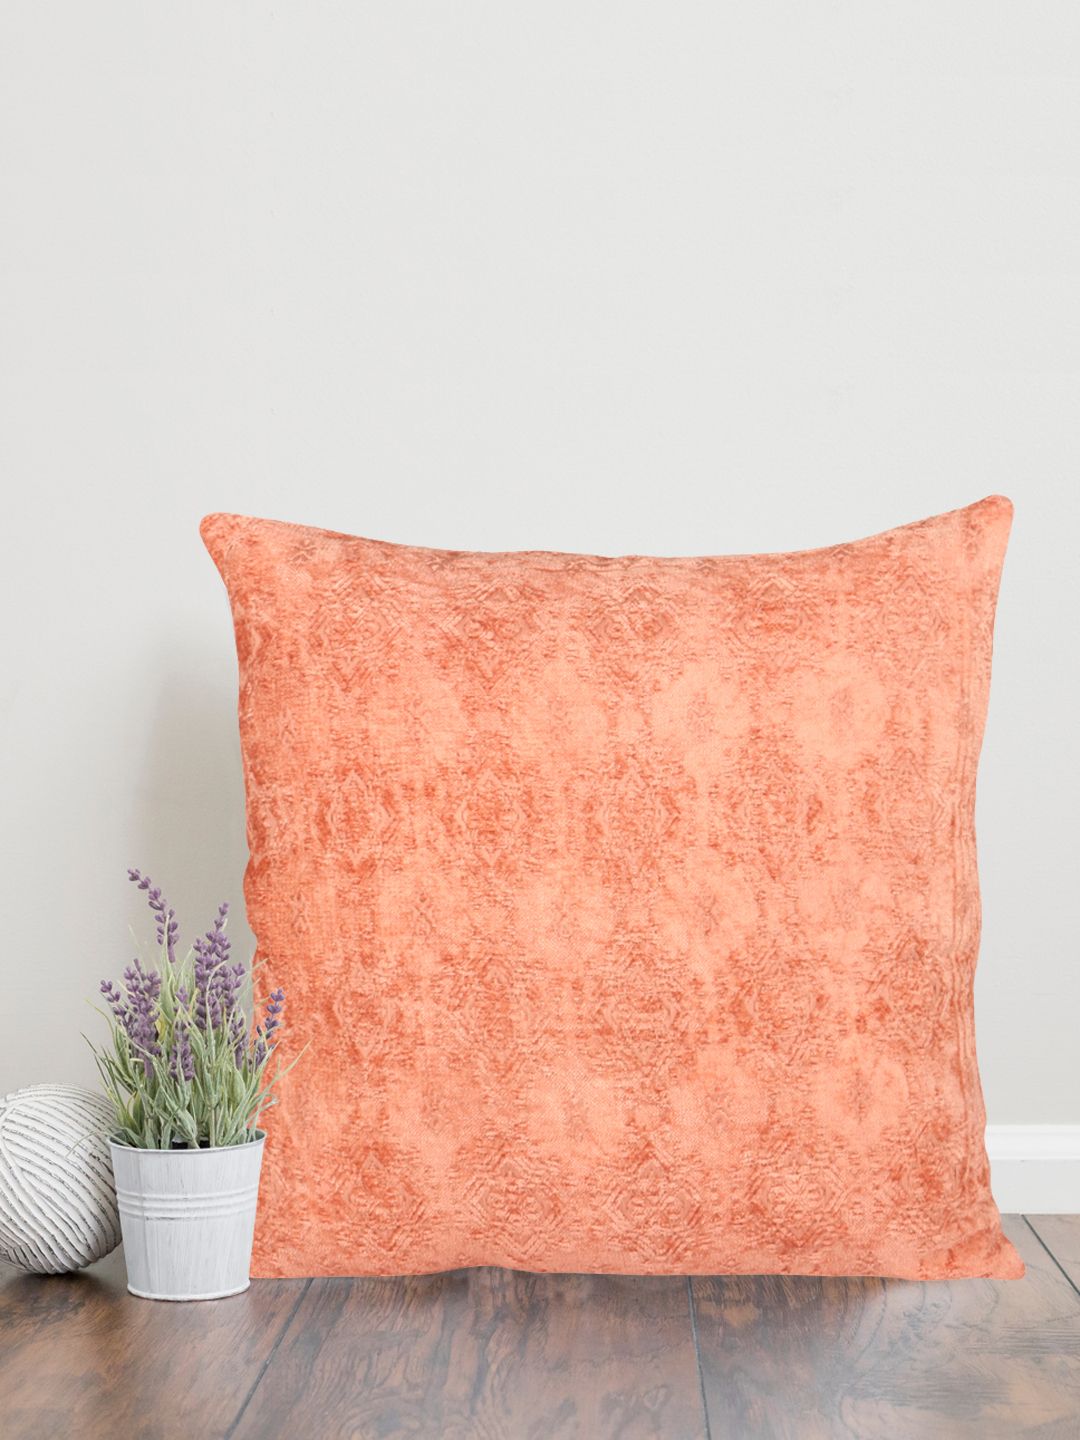 Home Orange Square Cushion Covers Price in India